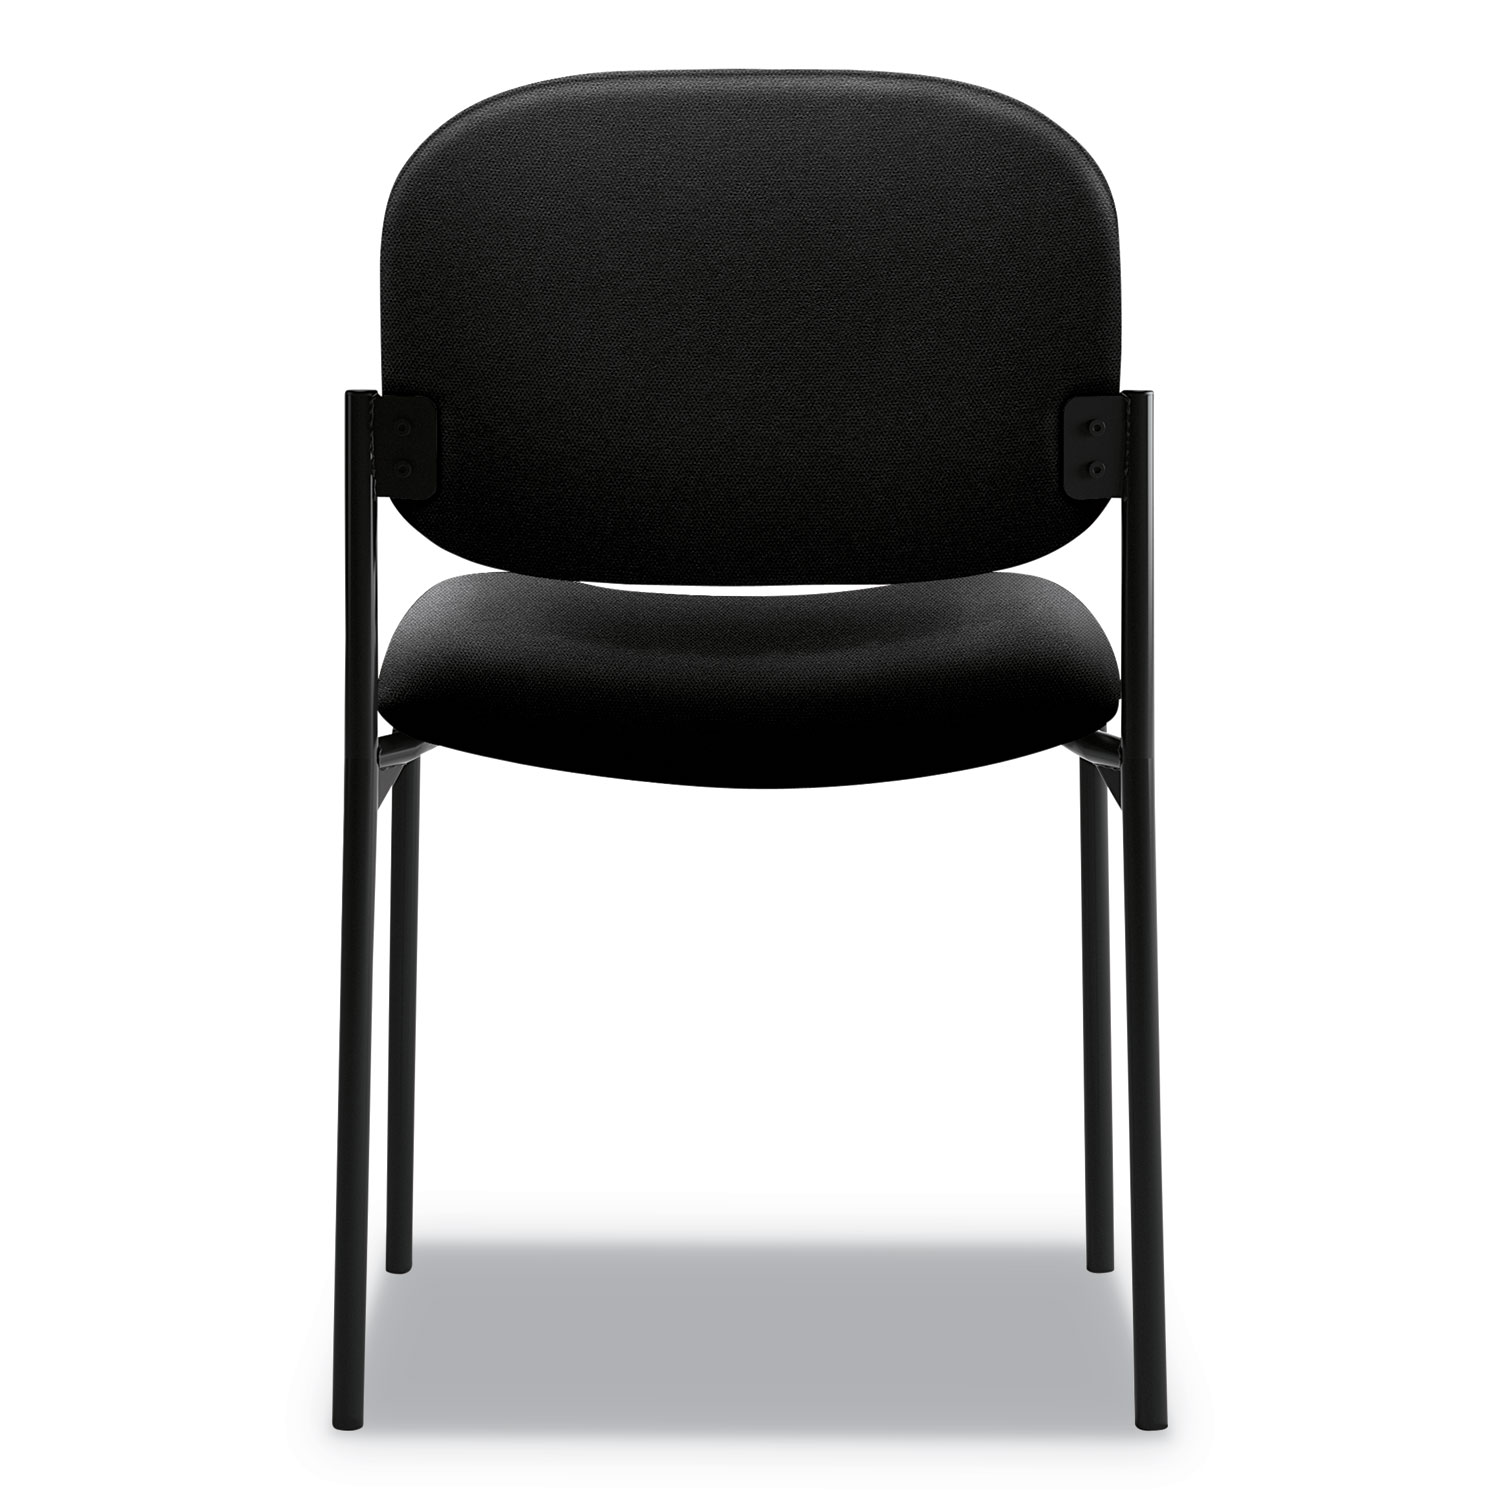  HON HVL606.VA10 VL606 Stacking Guest Chair without Arms, Black Seat/Black Back, Black Base (BSXVL606VA10) 